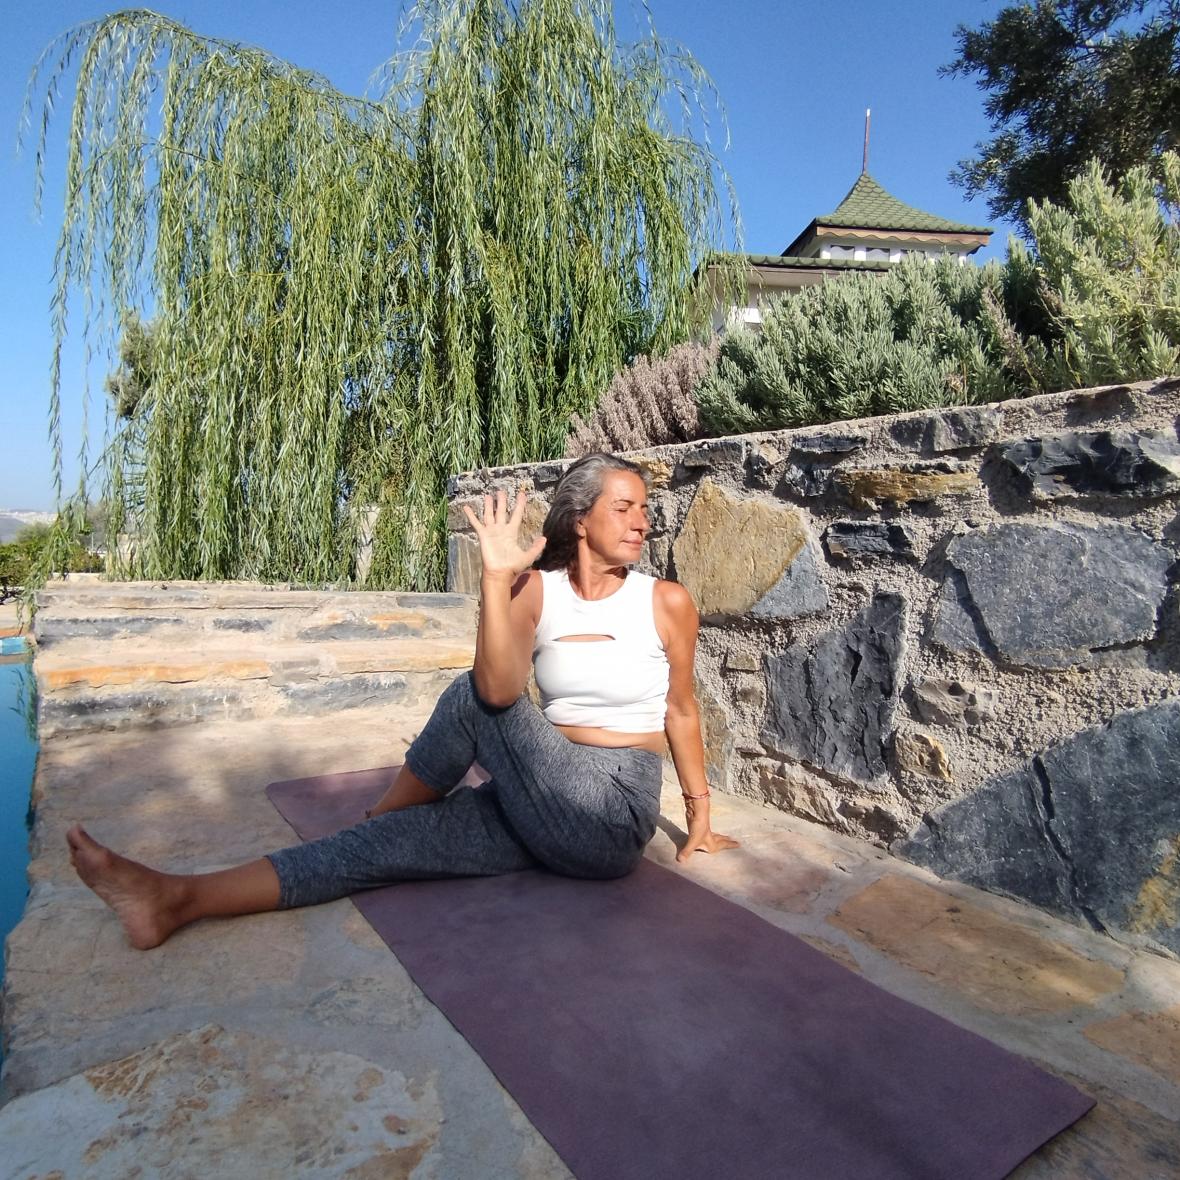 25 Günde 200 saat Hatha-Vinyasa Yoga TTC 04 – 29 Ocak 2023 Çiğdem Sarı